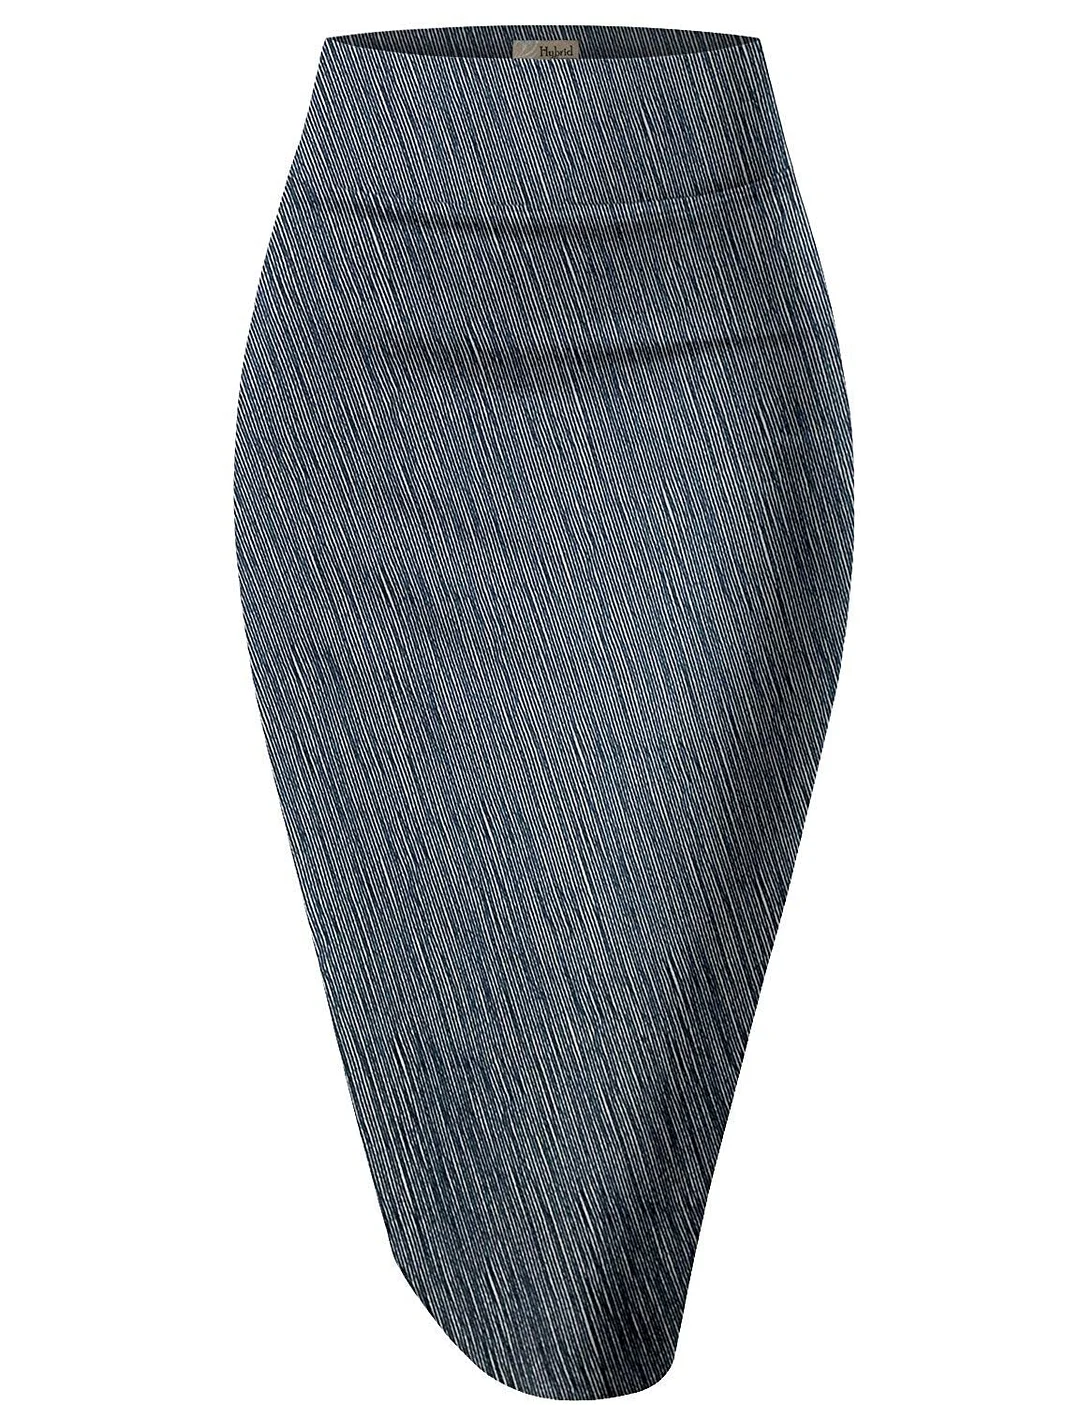 Pencil Skirt Women's Techno/Scuba Stretchy Office Pencil Skirt